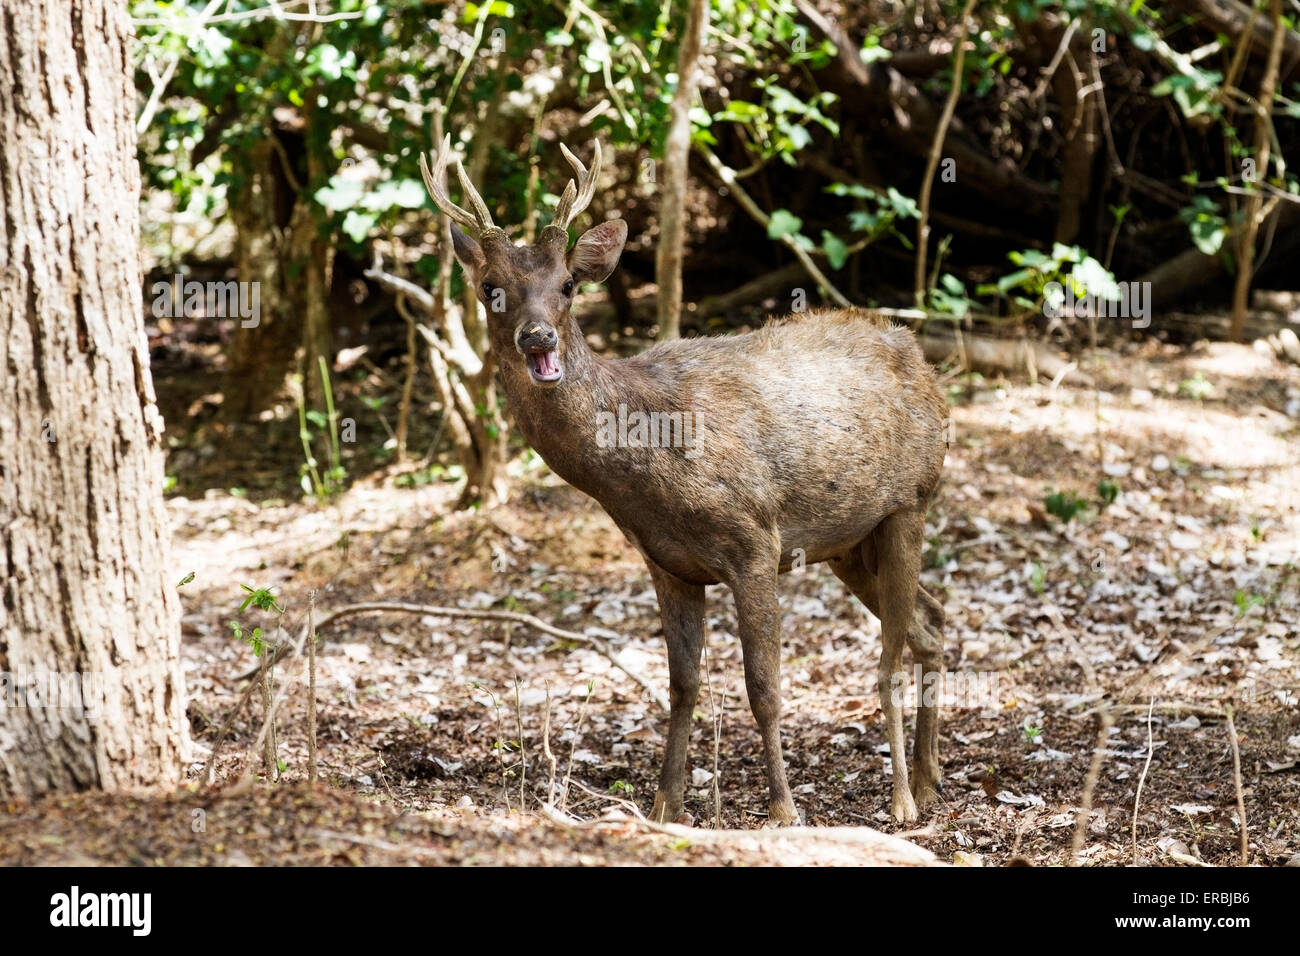 Timor deer (Rusa timorensis) adult in thick vegetation, Komodo island, Indonesia Stock Photo